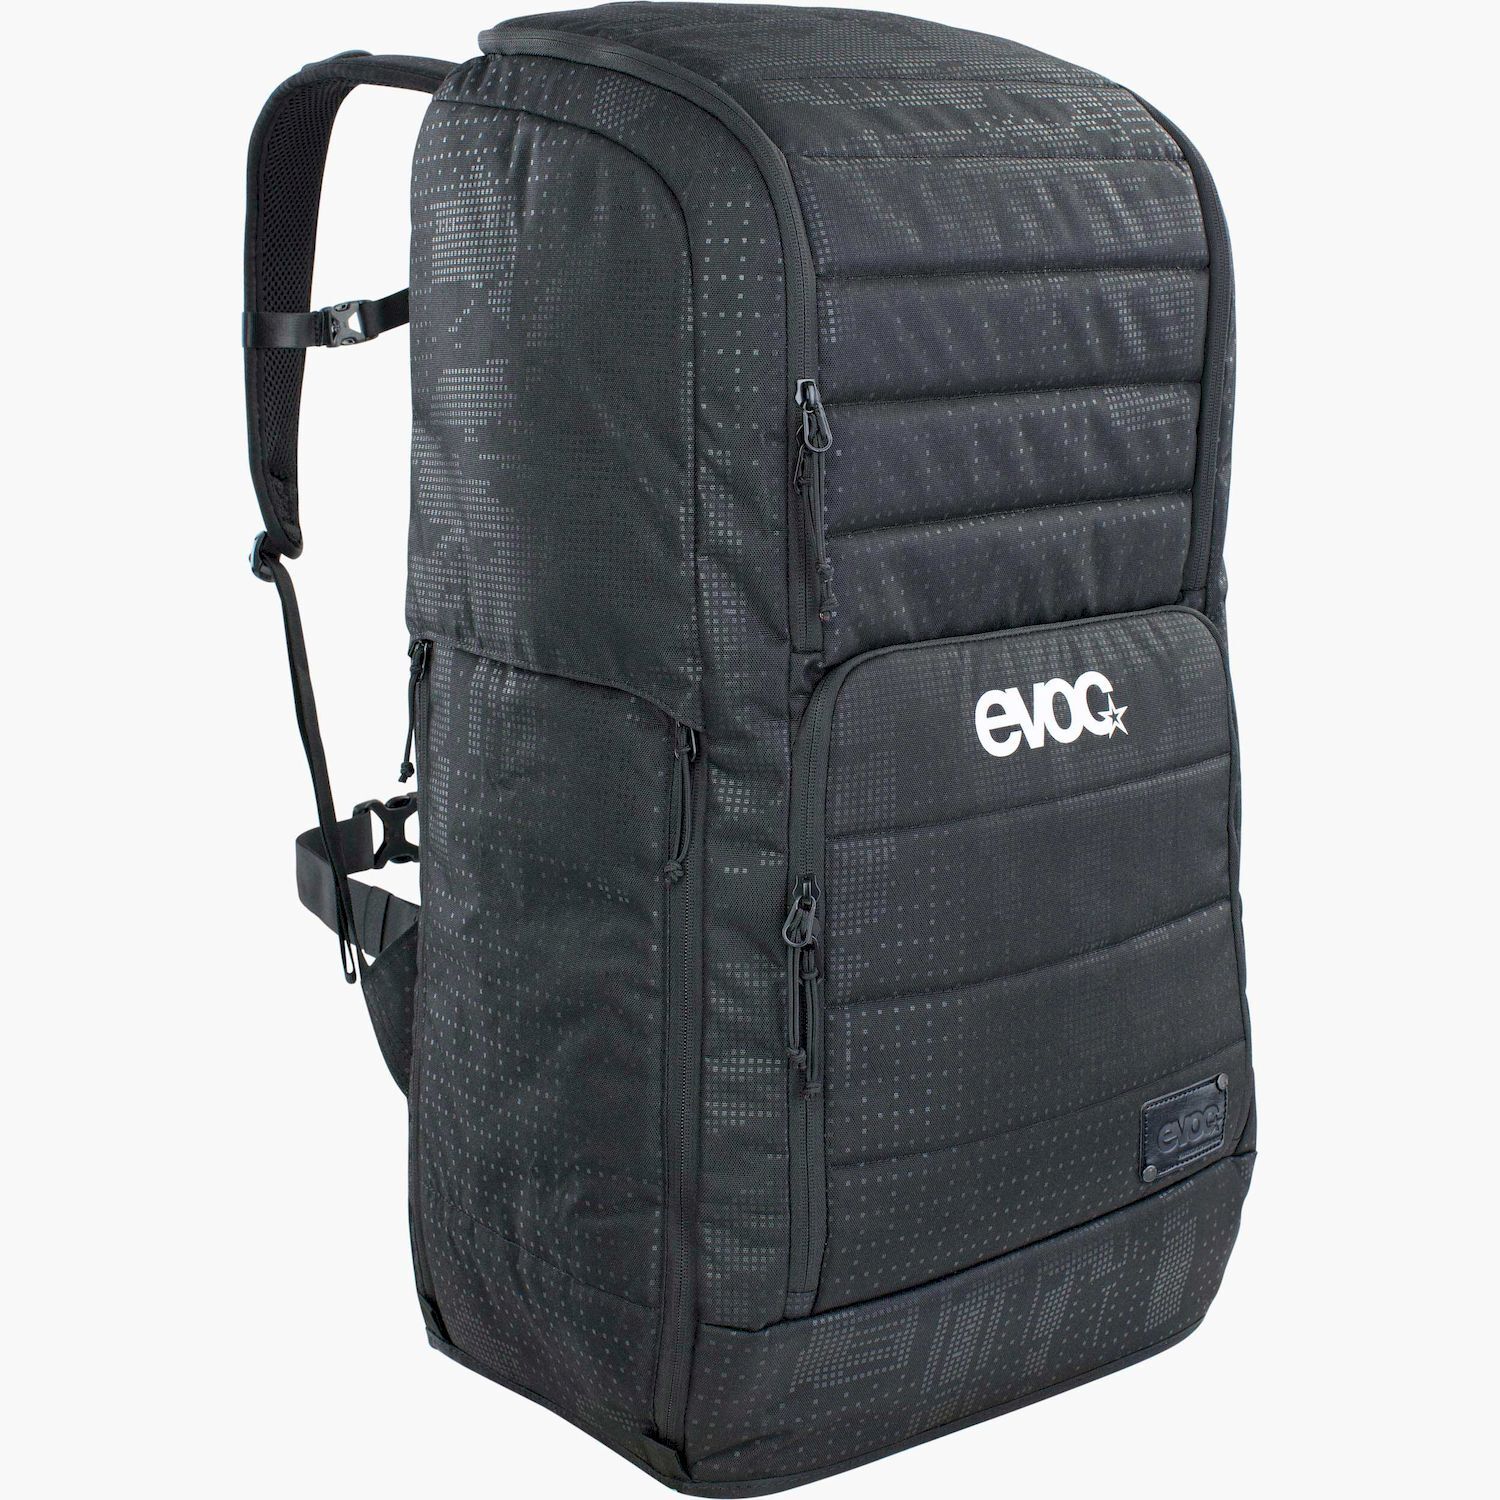 Evoc Gear Backpack 90 - Ski shoe bag